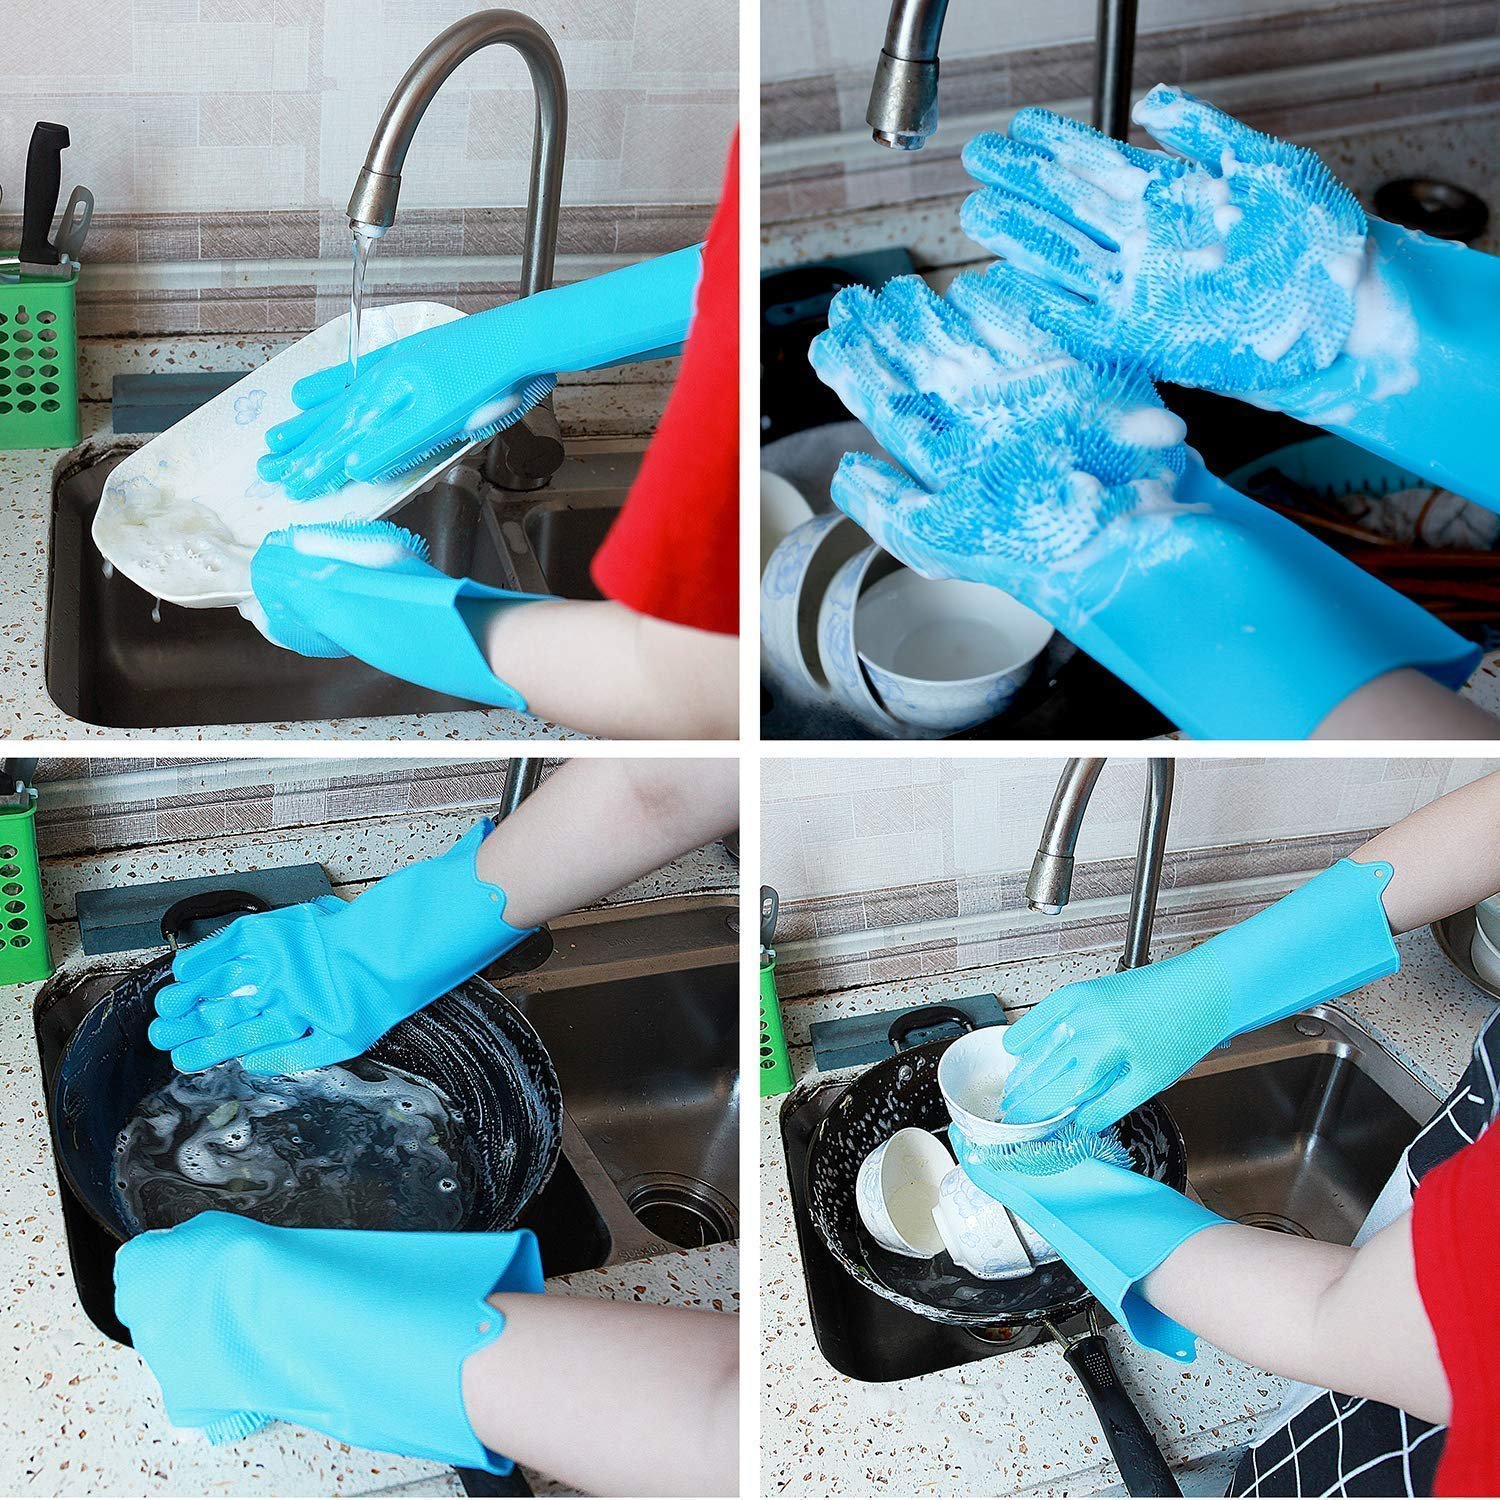 Washing dishes using silicone gloves